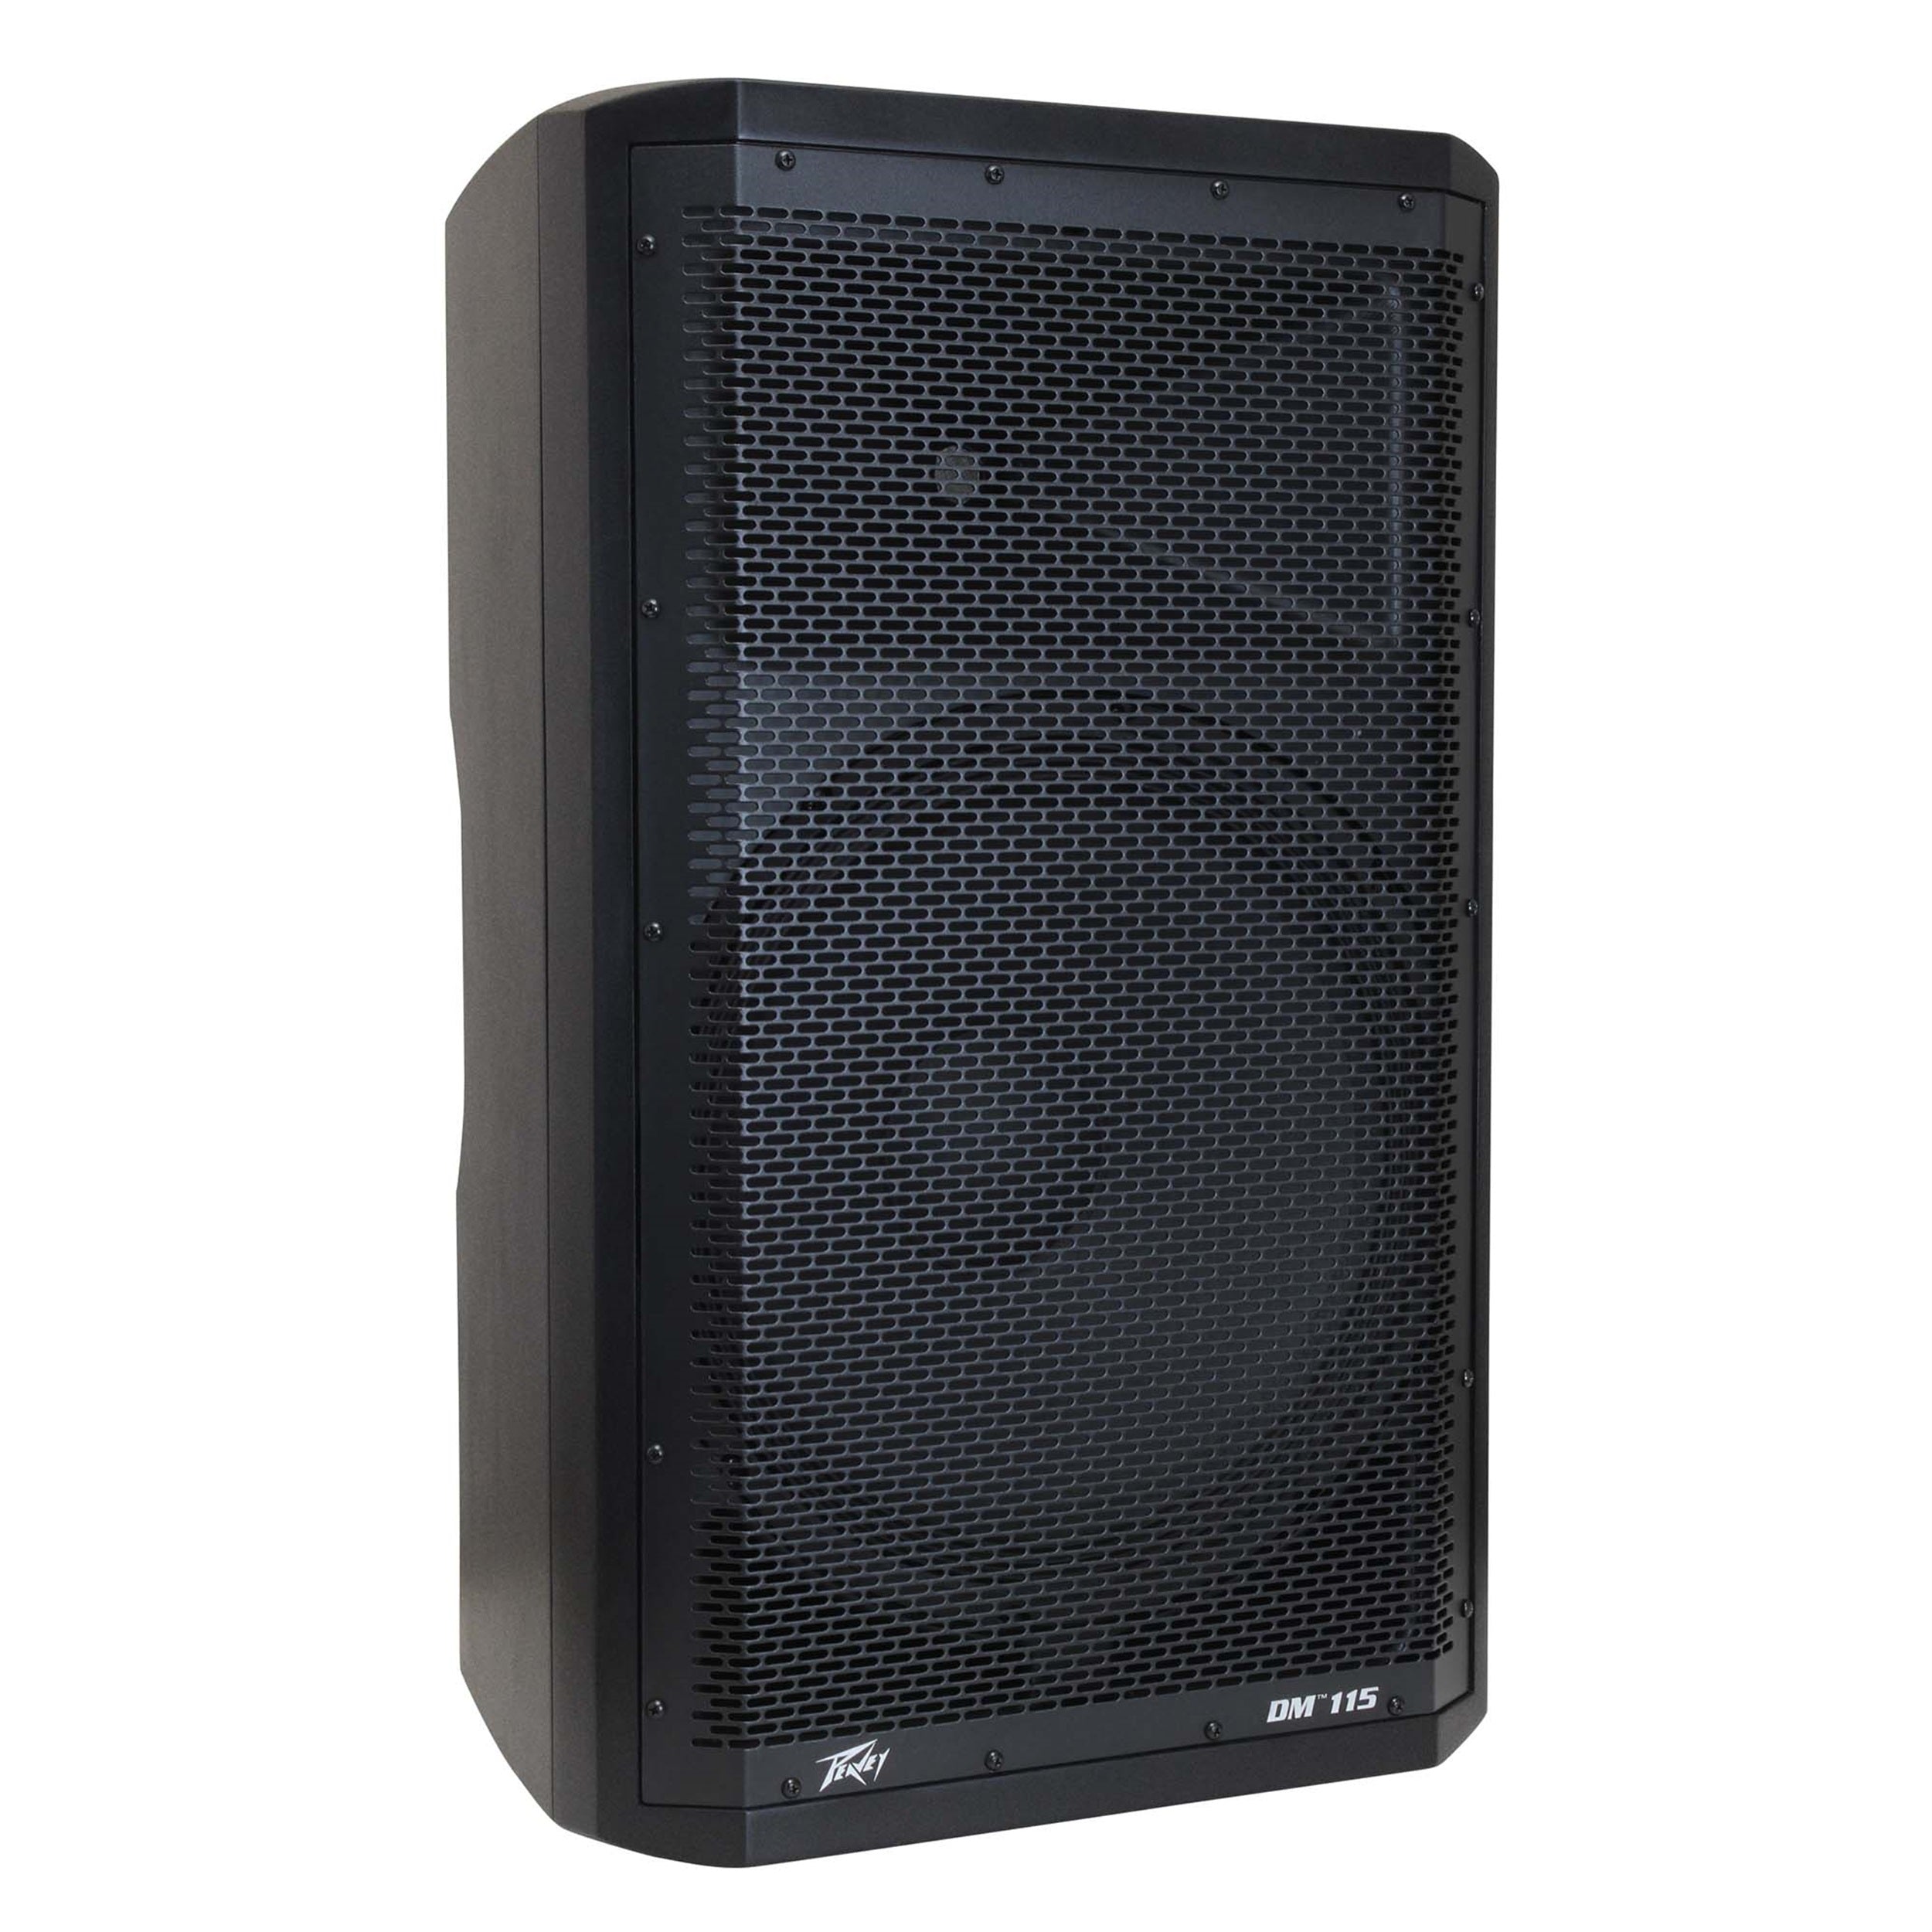 Open Box: Peavey DM 115 120US Dark Matter Powered PA Loudspeaker - Hollywood DJ